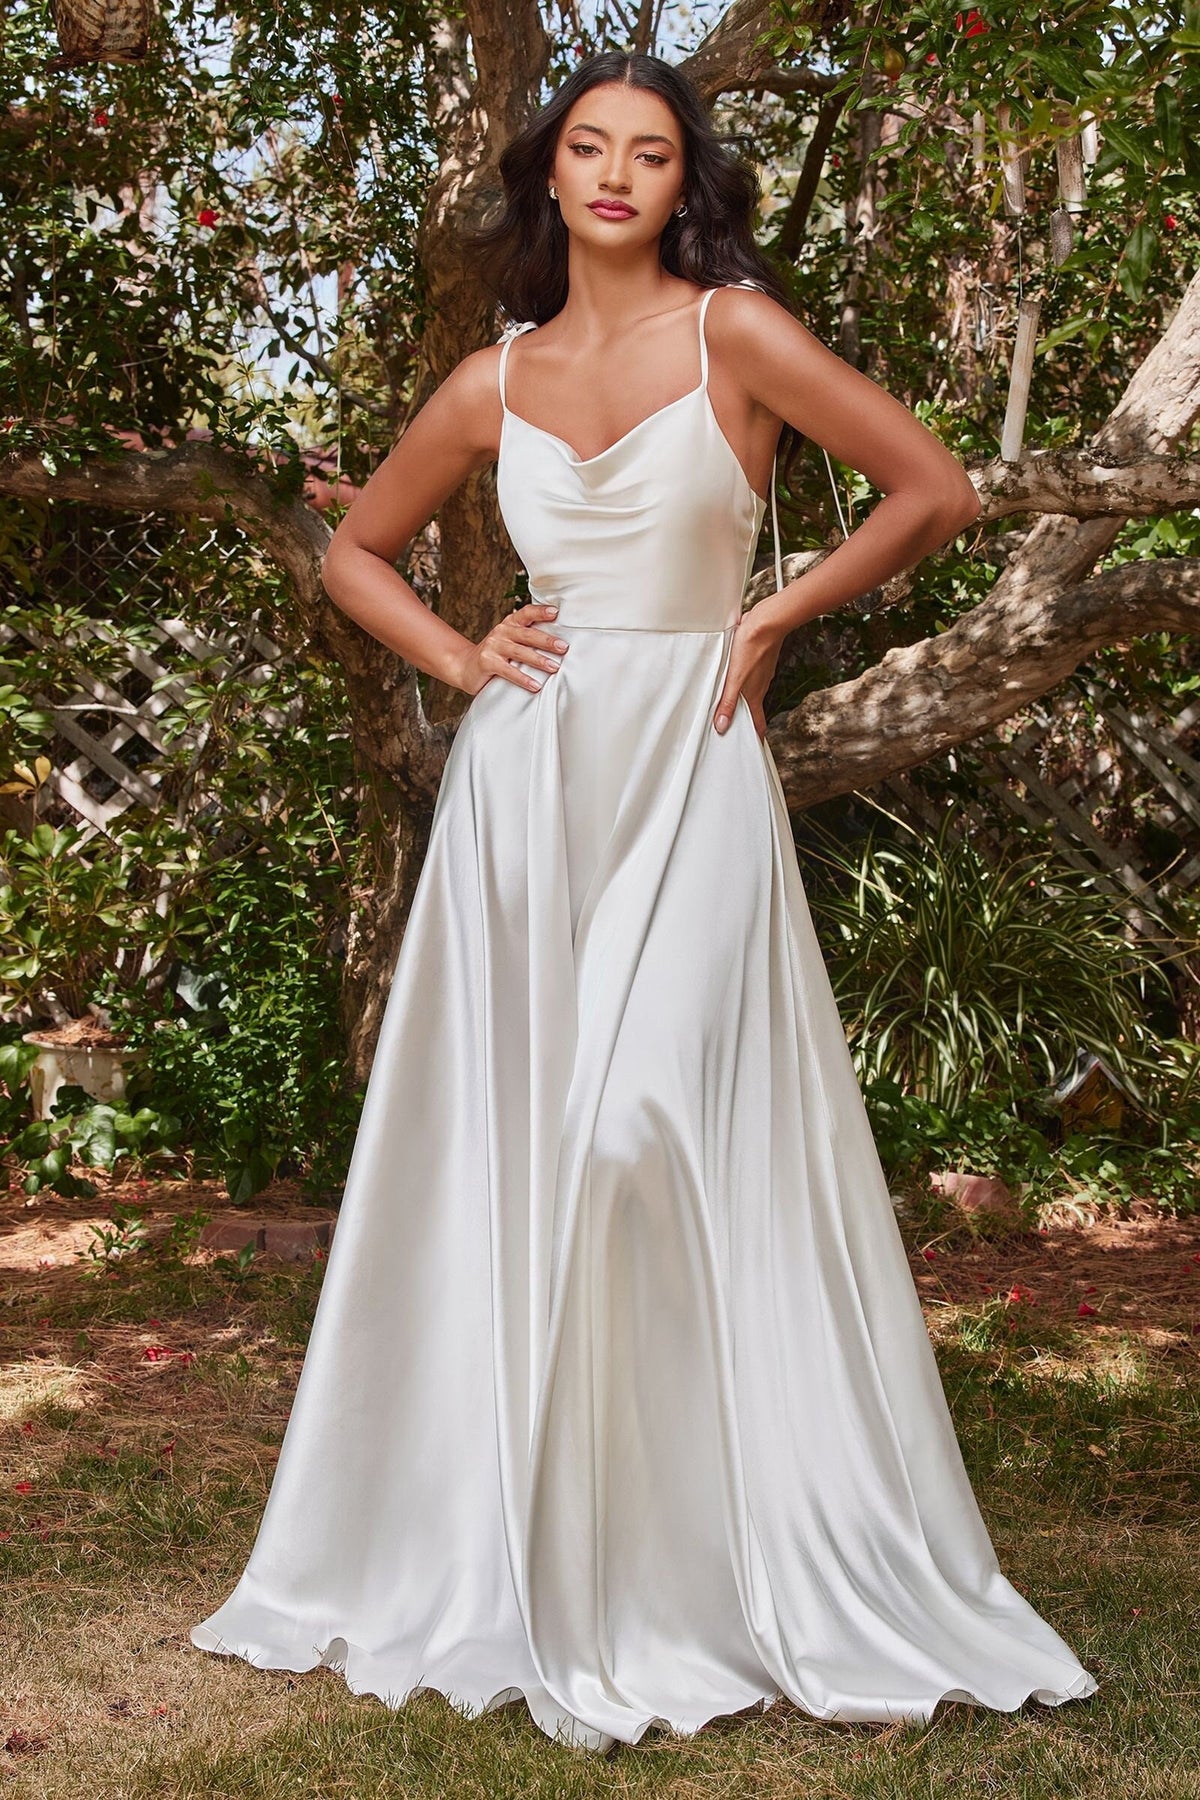 Ravishing Erika Cowl Aline Satin Wedding Dress Sleeveless Bridal Gown Tie Shoulder Leg Slit Rehearsal Dinner Elopement Beach Wedding Dress